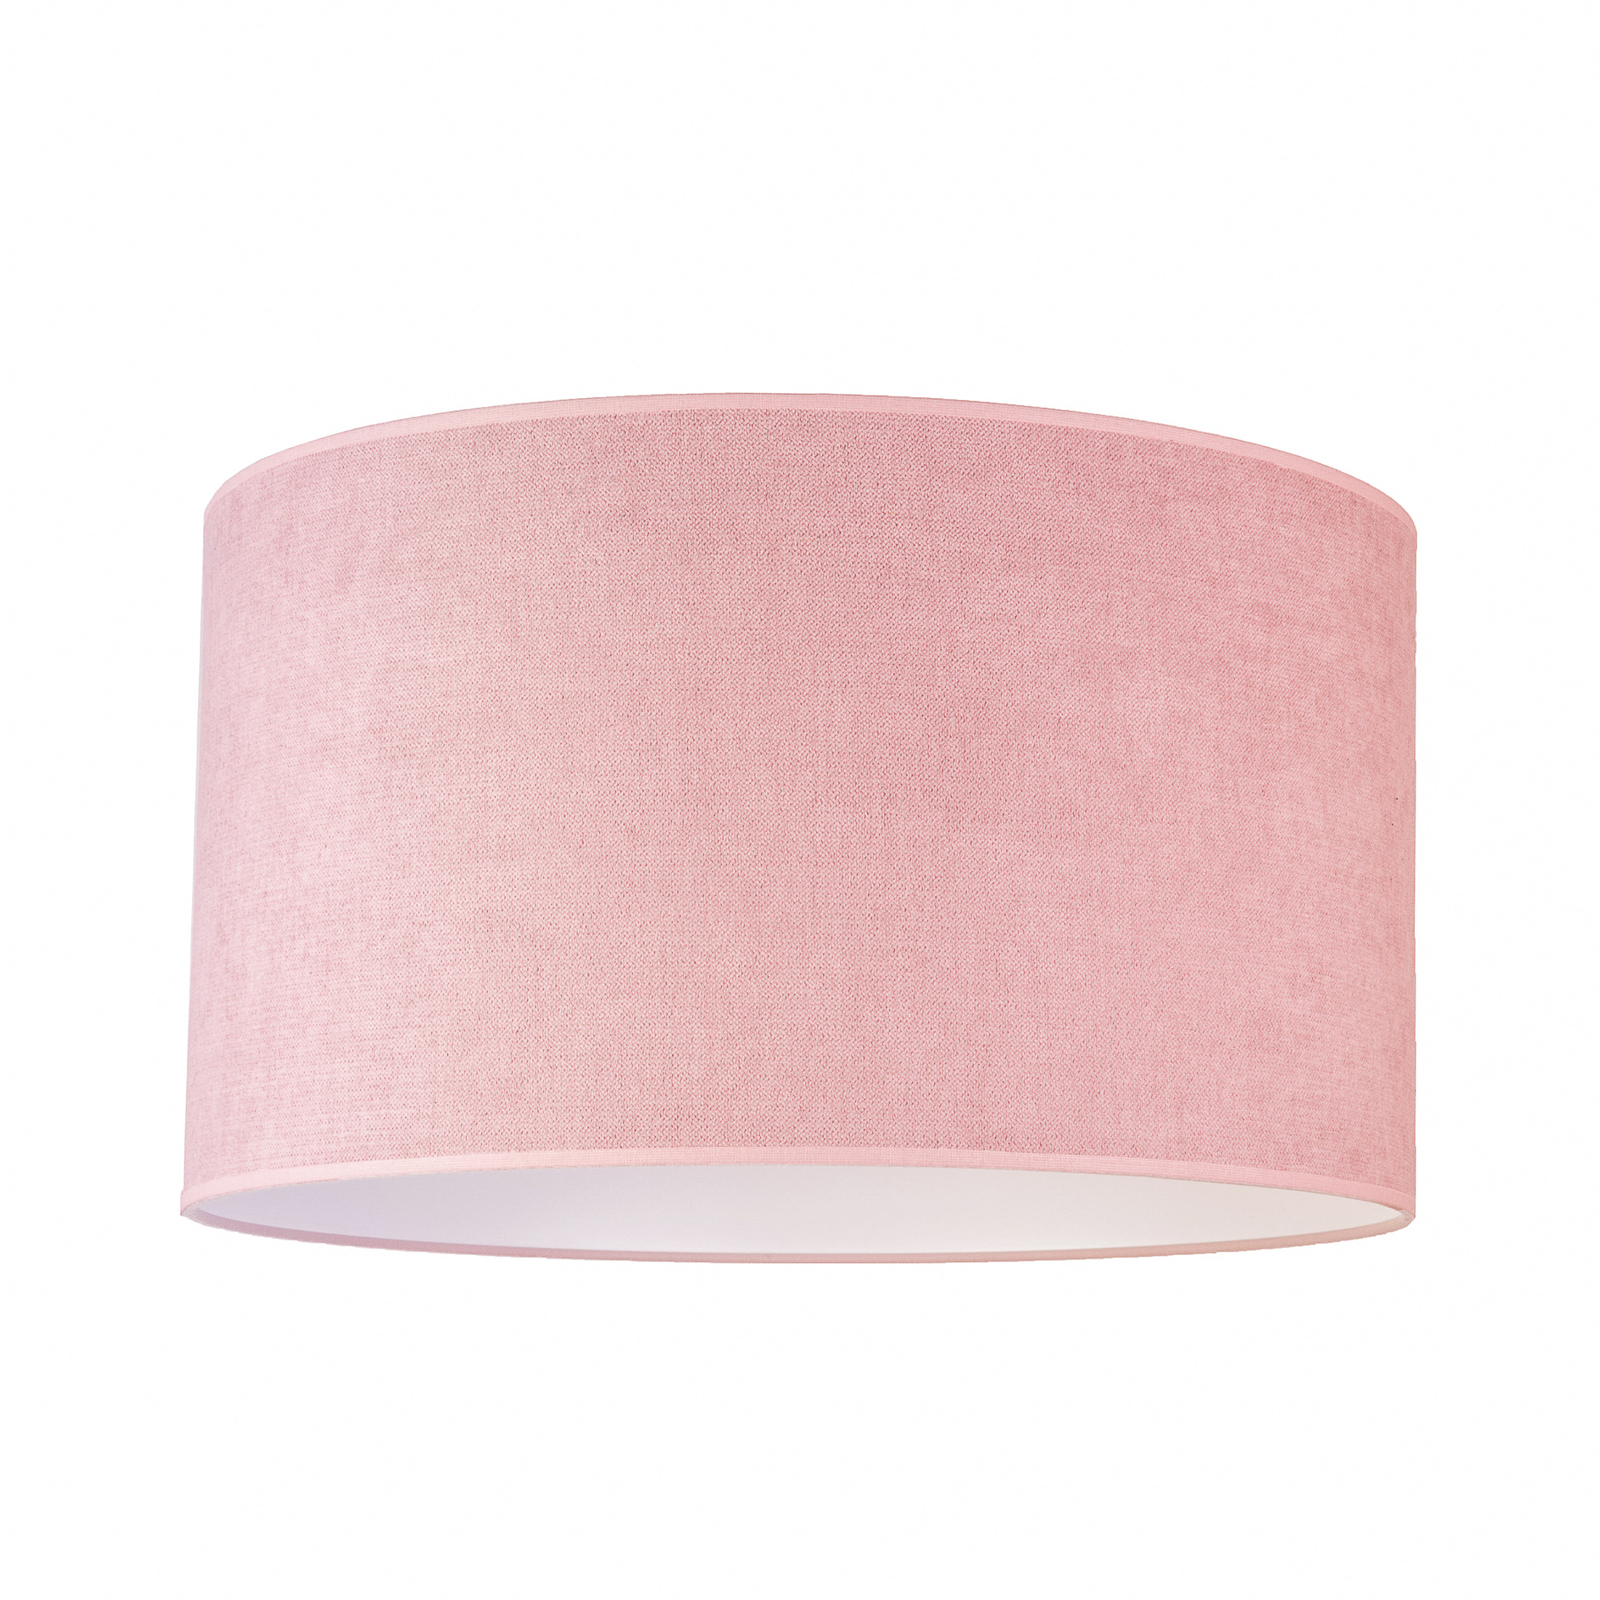 Deckenlampe Pastell Roller Ø 45cm rosa